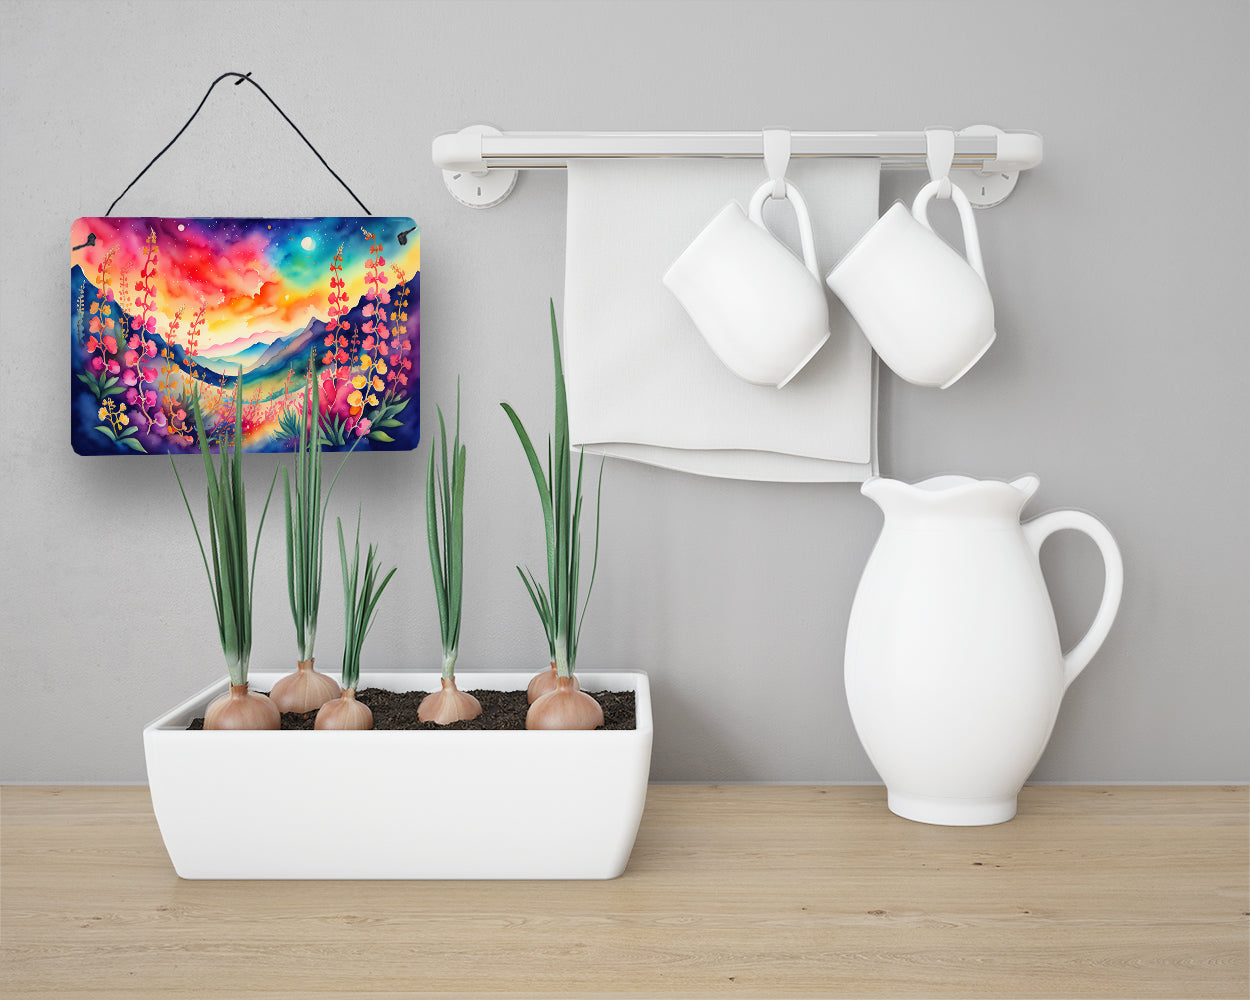 Snapdragon in Color Wall or Door Hanging Prints